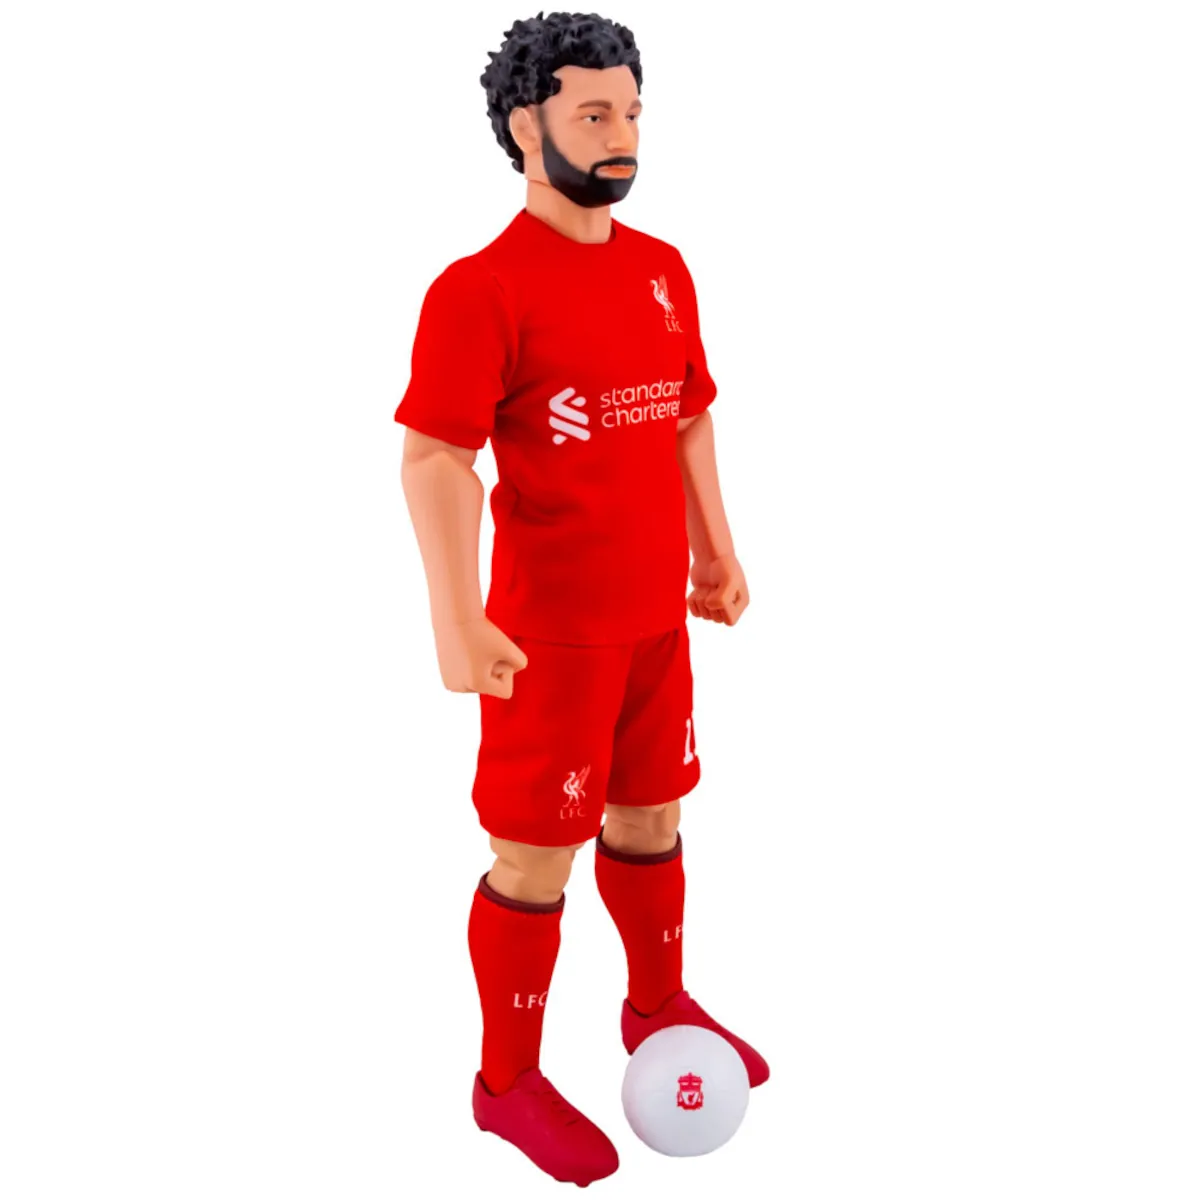 TM-03855 Liverpool FC Mohamed Salah 30cm Action Figure 2